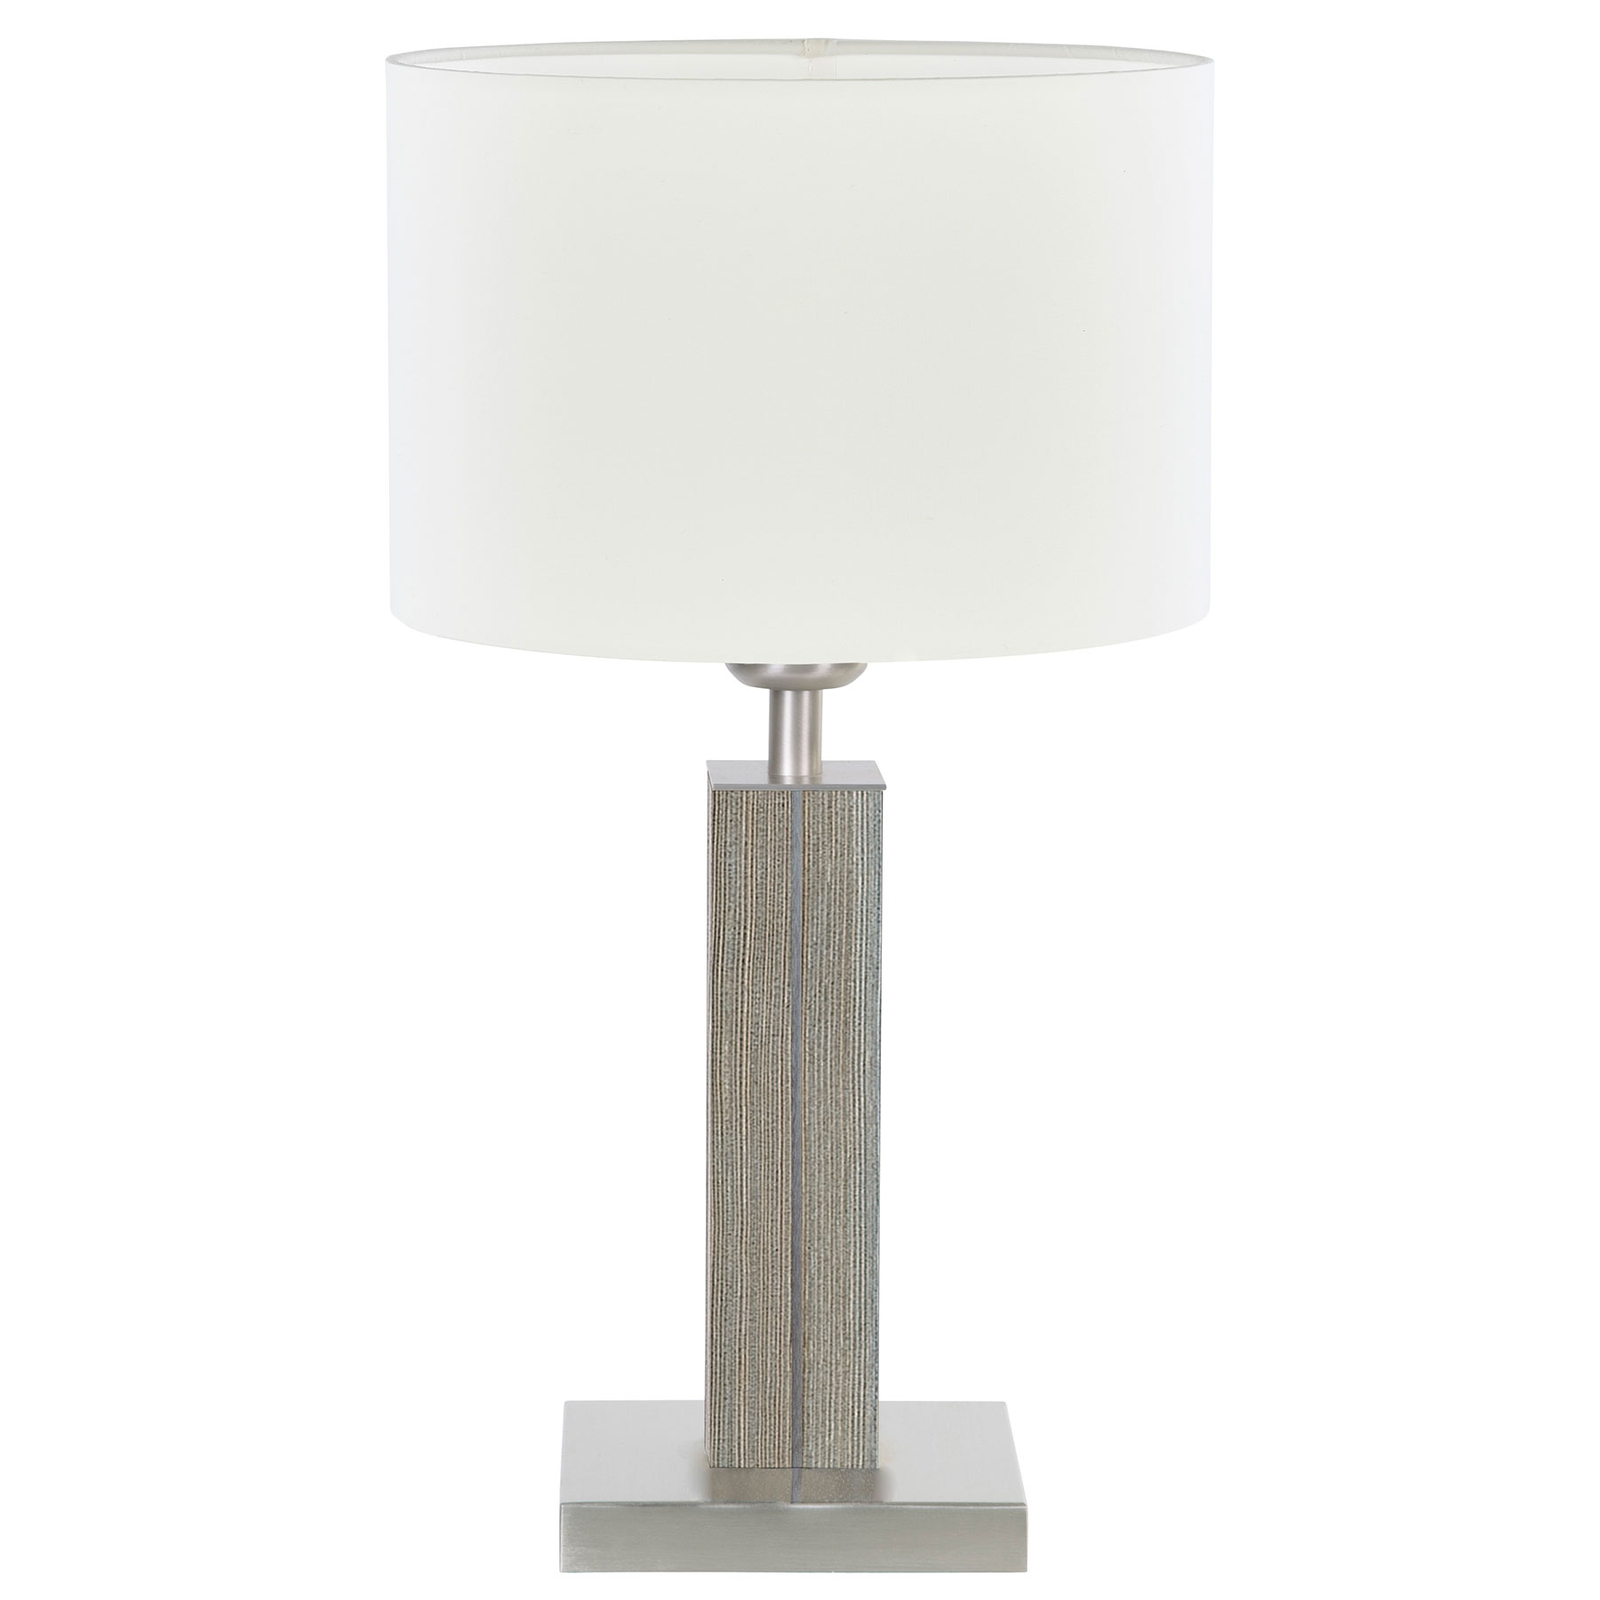 HerzBlut Dana bordlampe, gran, hvit, 45 cm